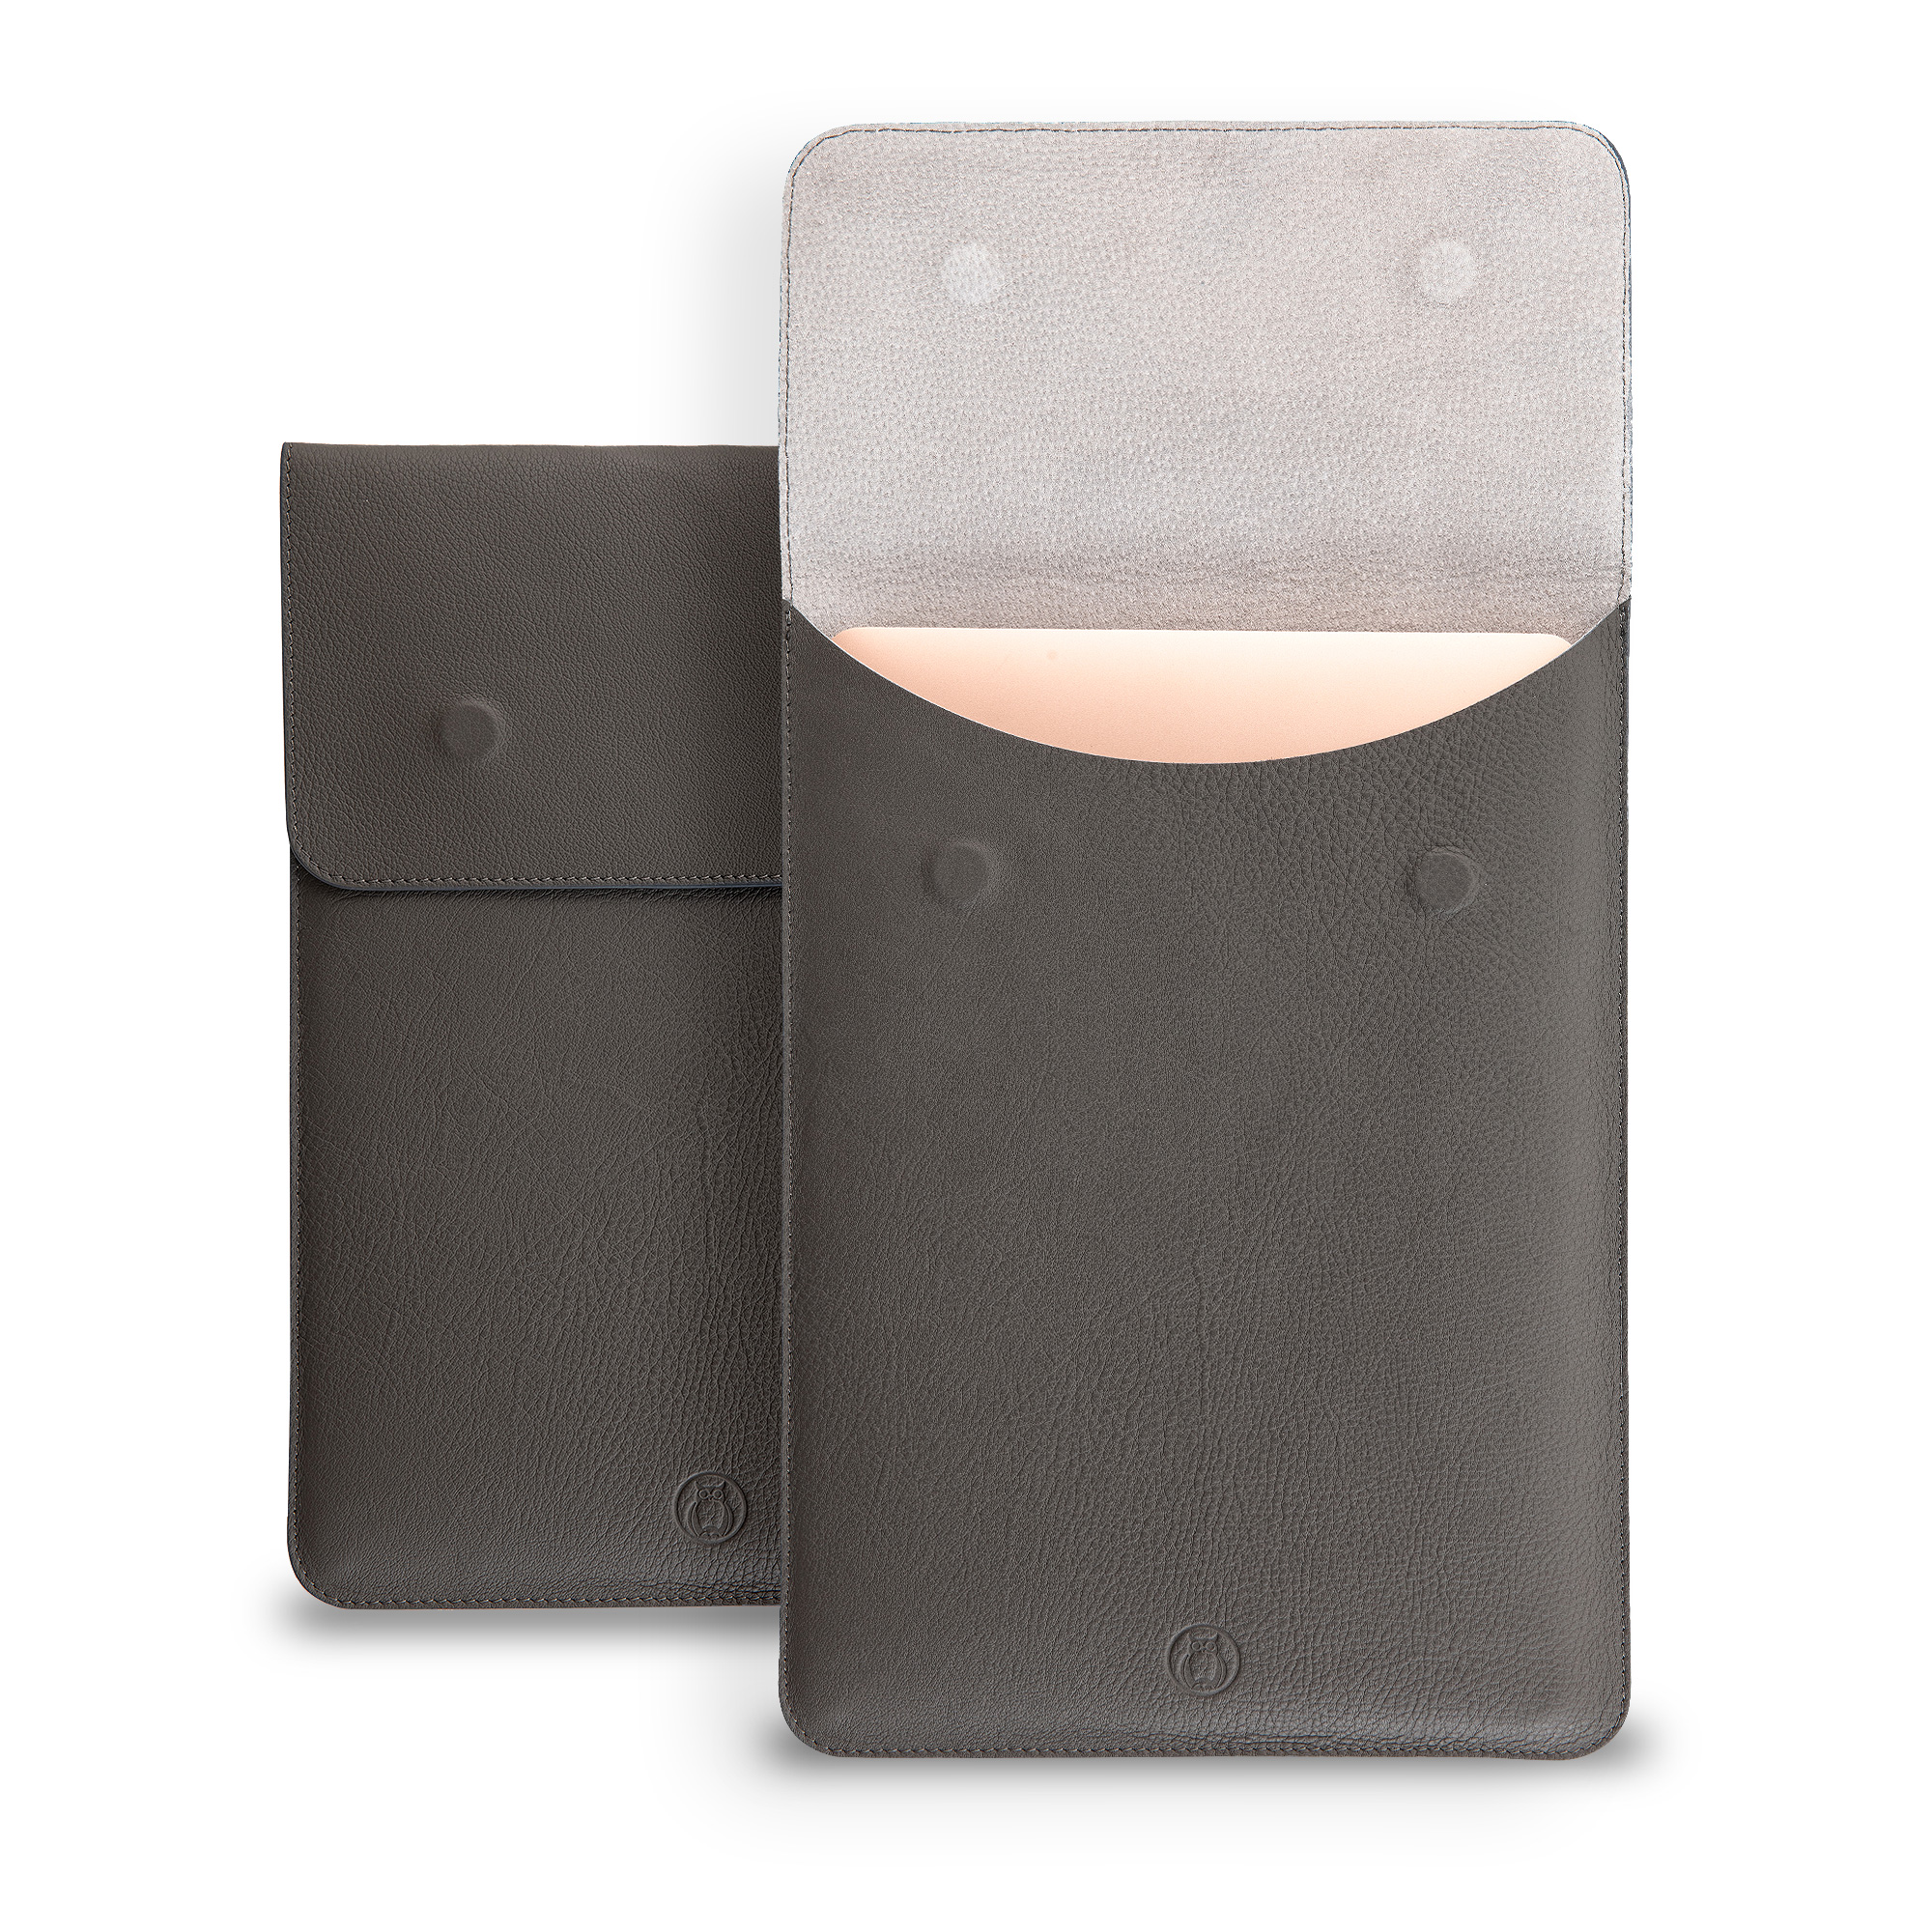 Husa laptop MacBook 13 inch piele naturala cu mouse pad inchidere magnetica margini vopsite manual e-store gri sanito.ro imagine model 2022